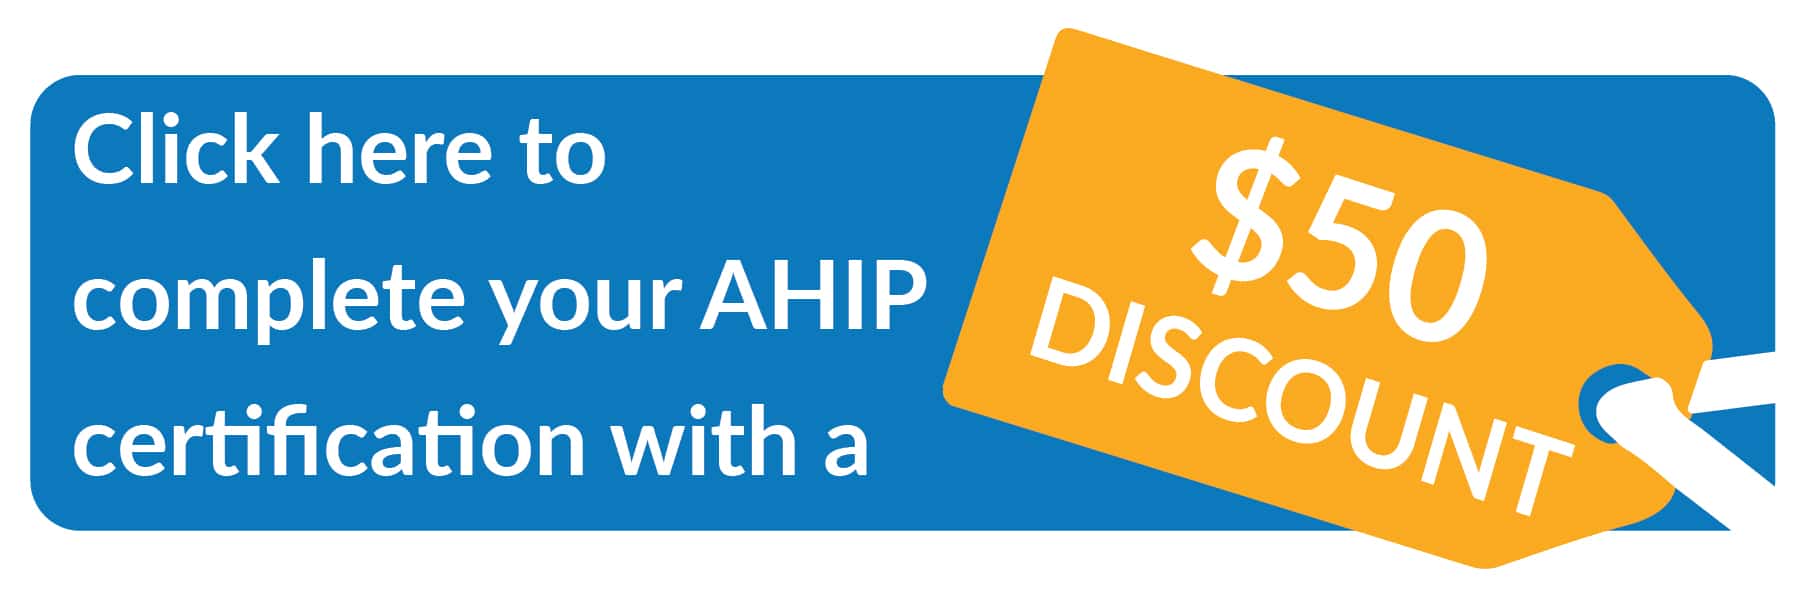 AHIP Certification Discount | Senior Market Advisors